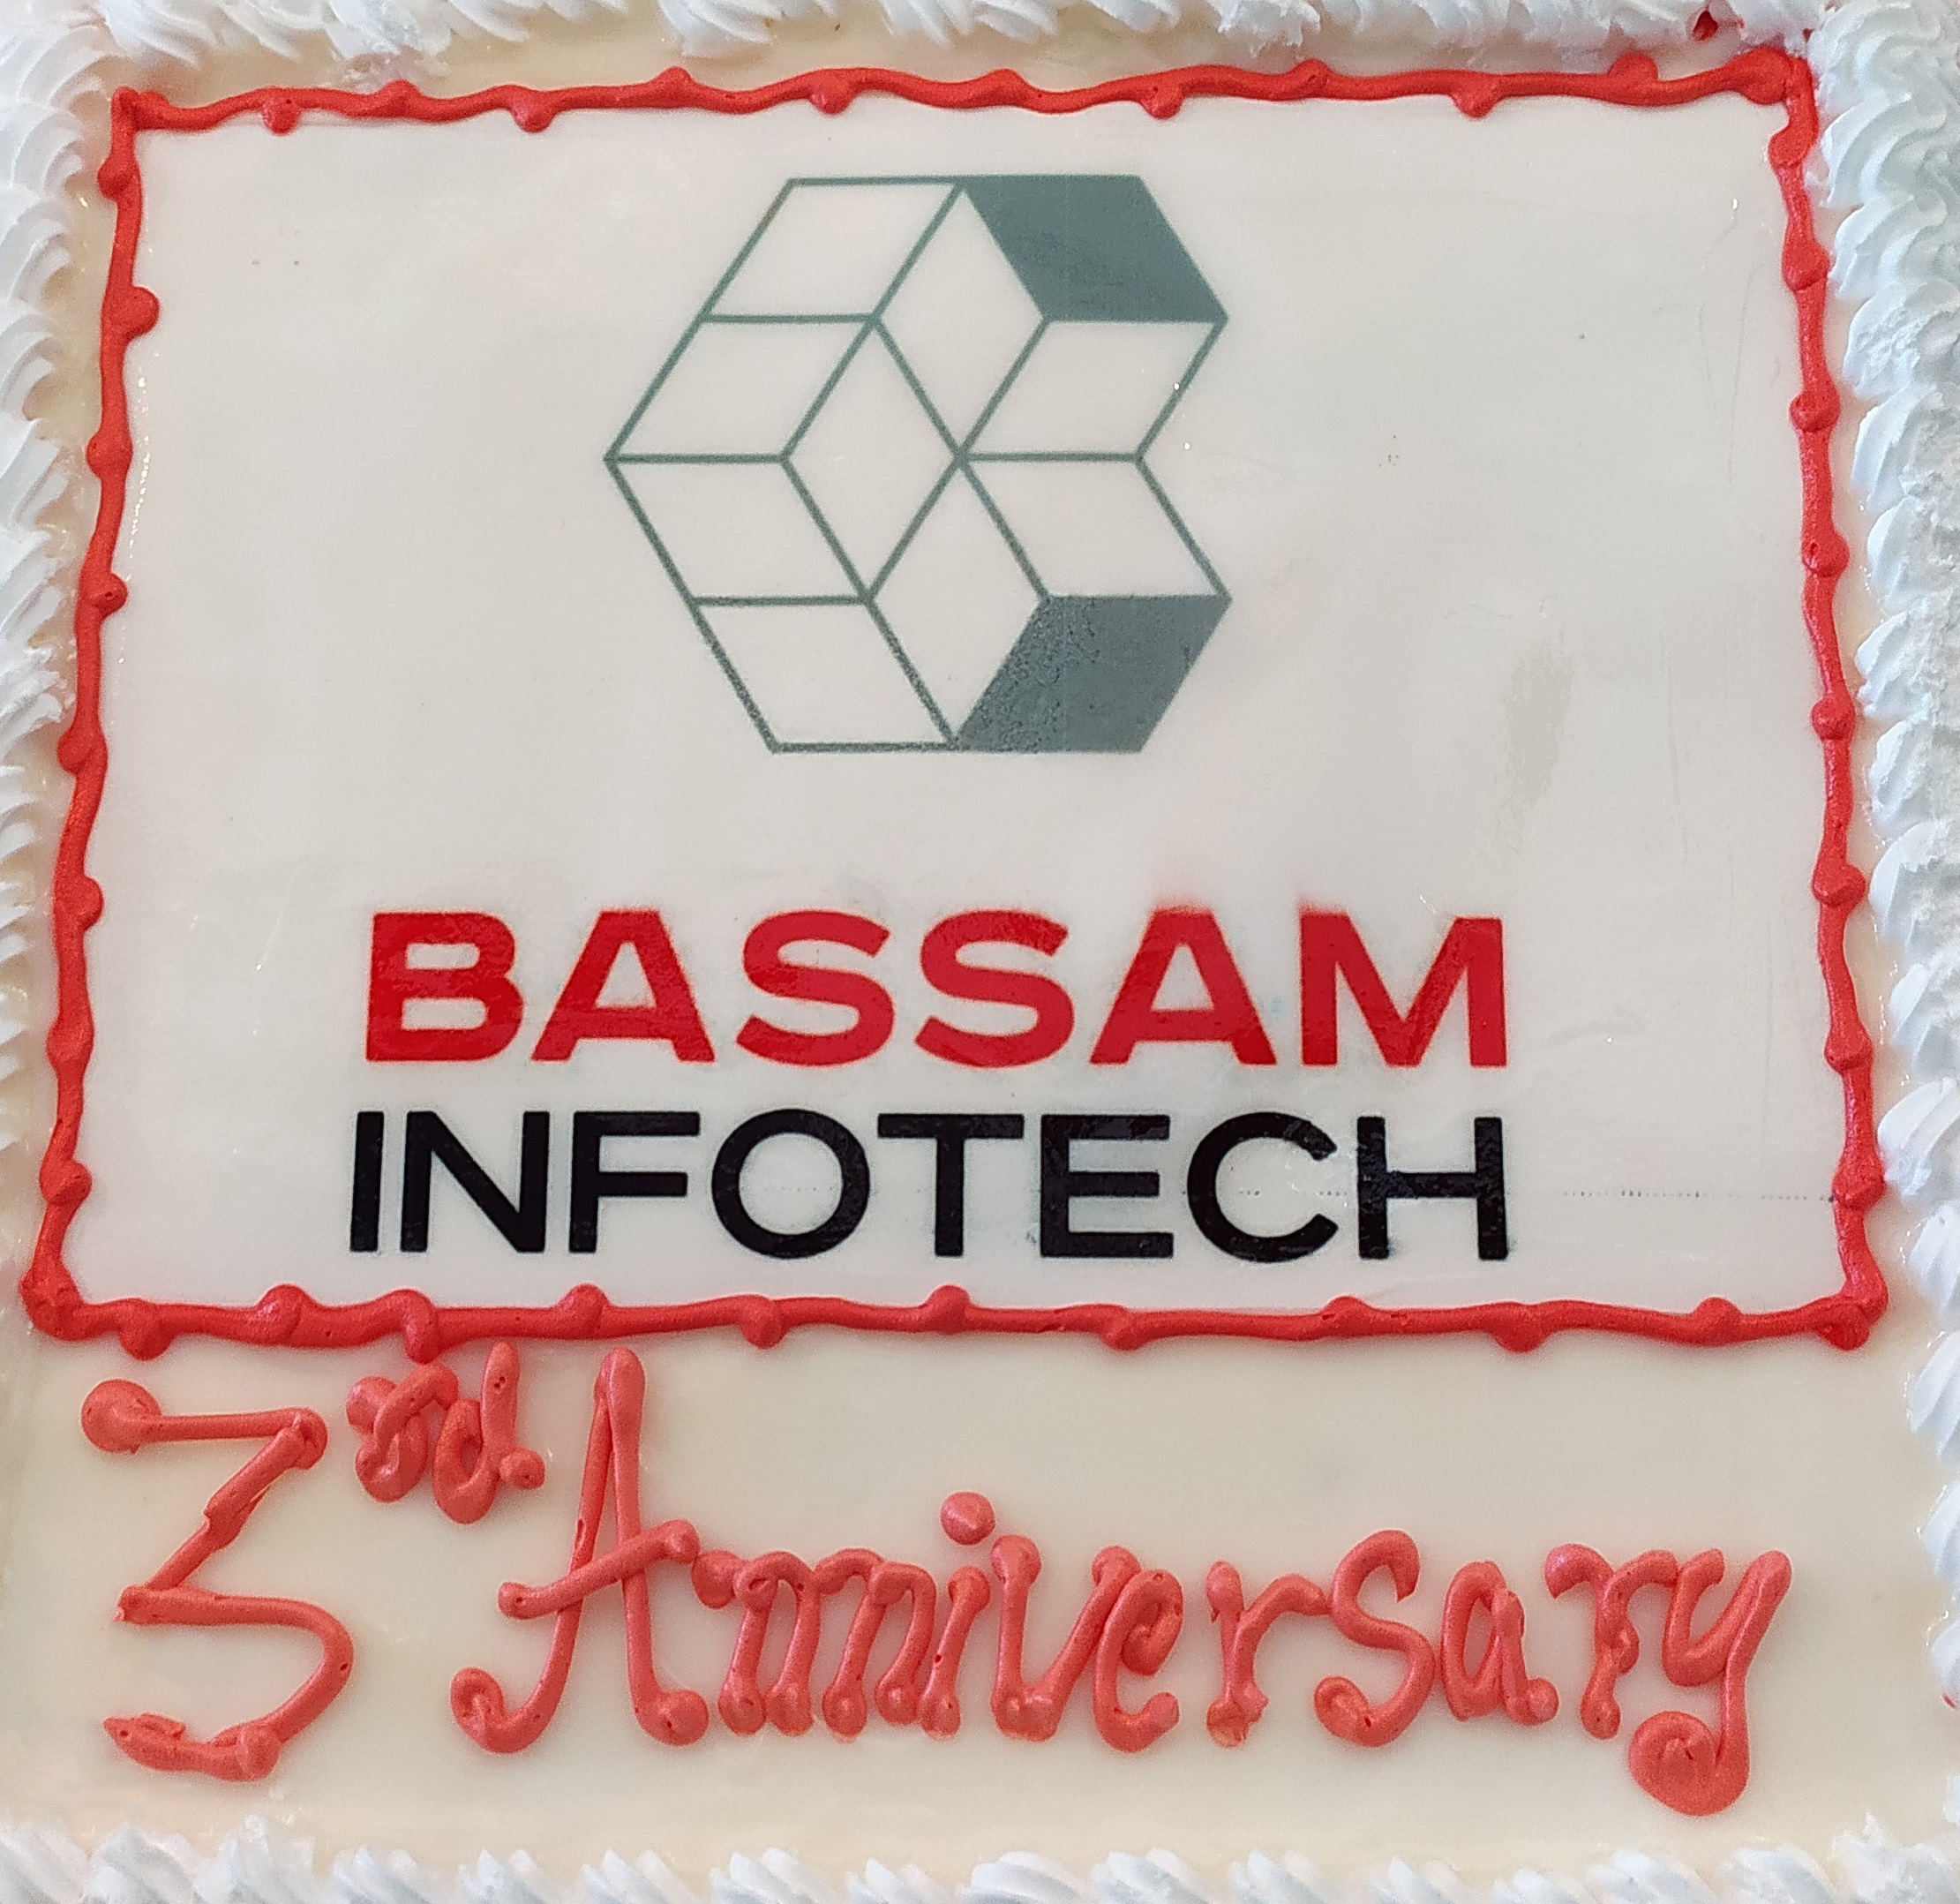 Celebrating the 3rd Anniversary of Bassam Infotech